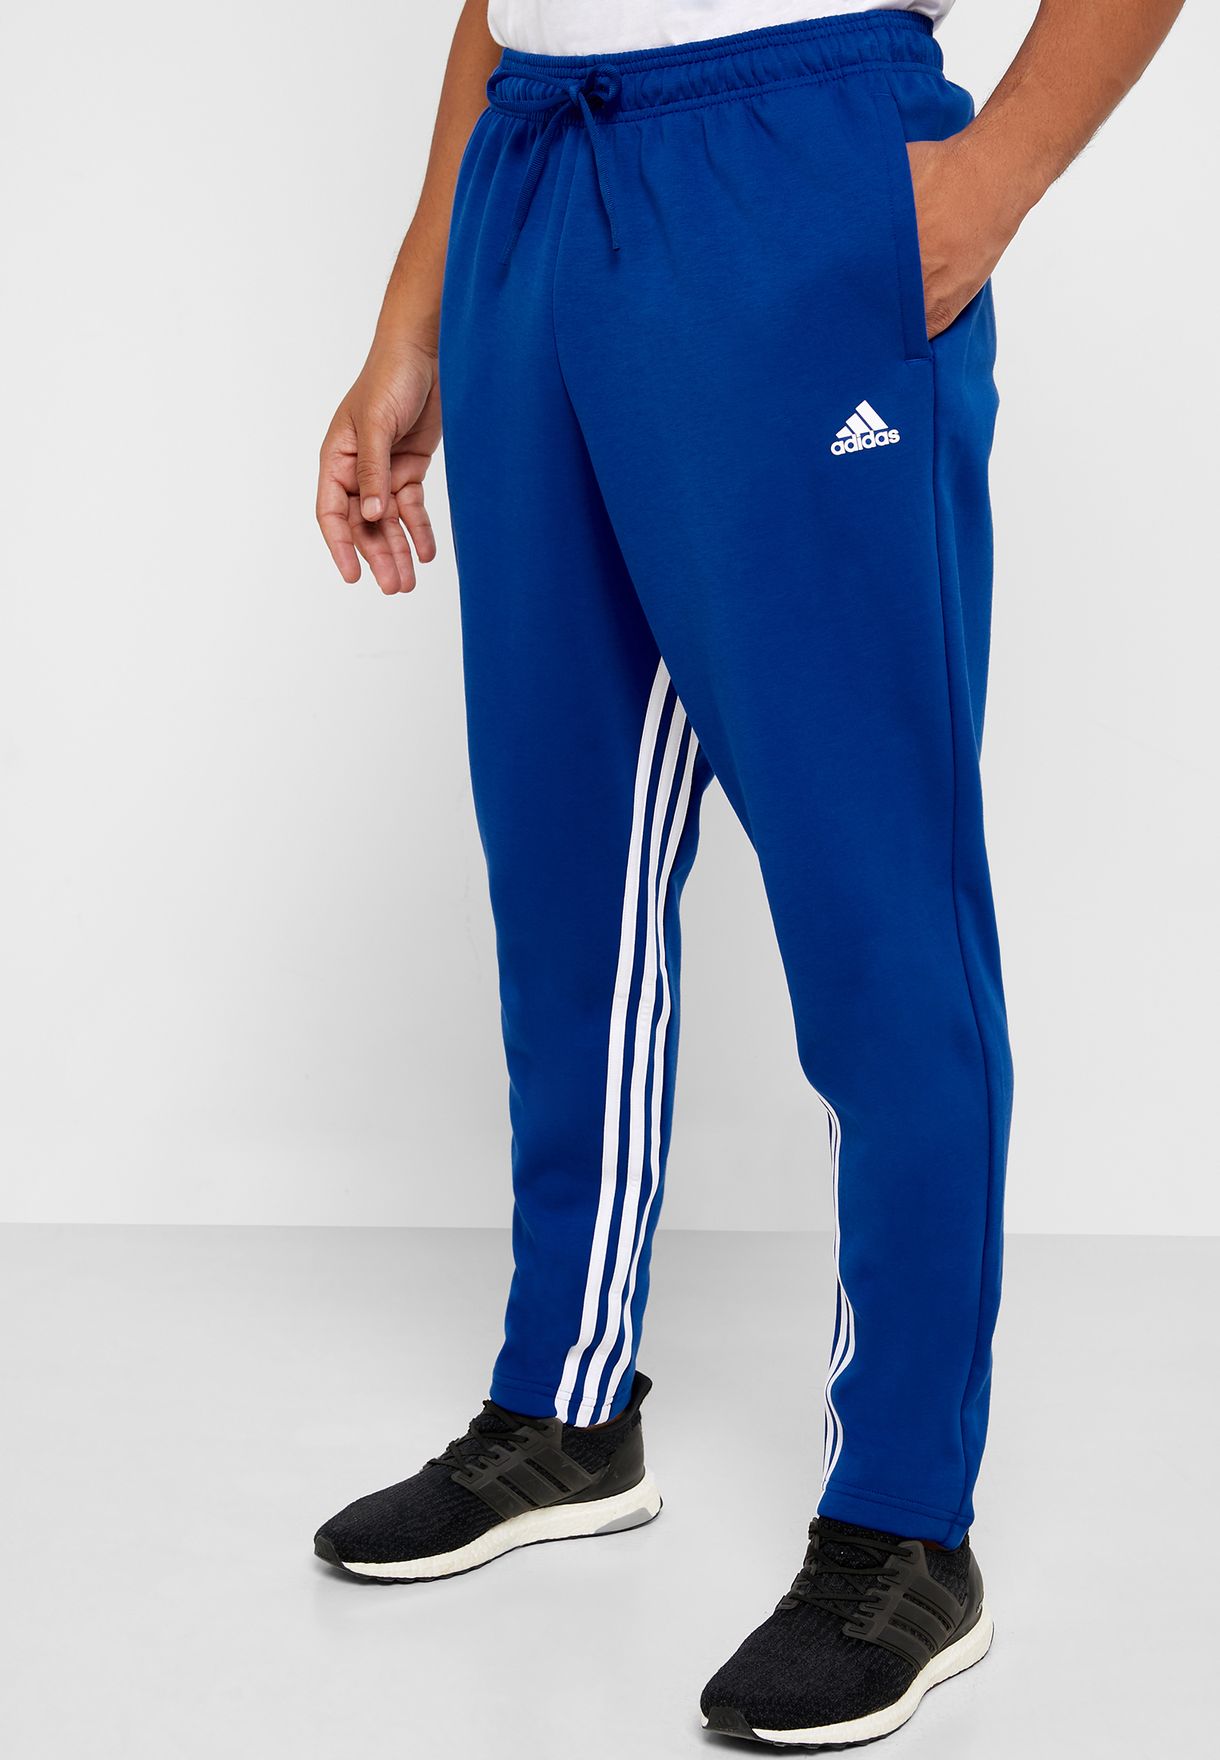 mens blue adidas sweatpants